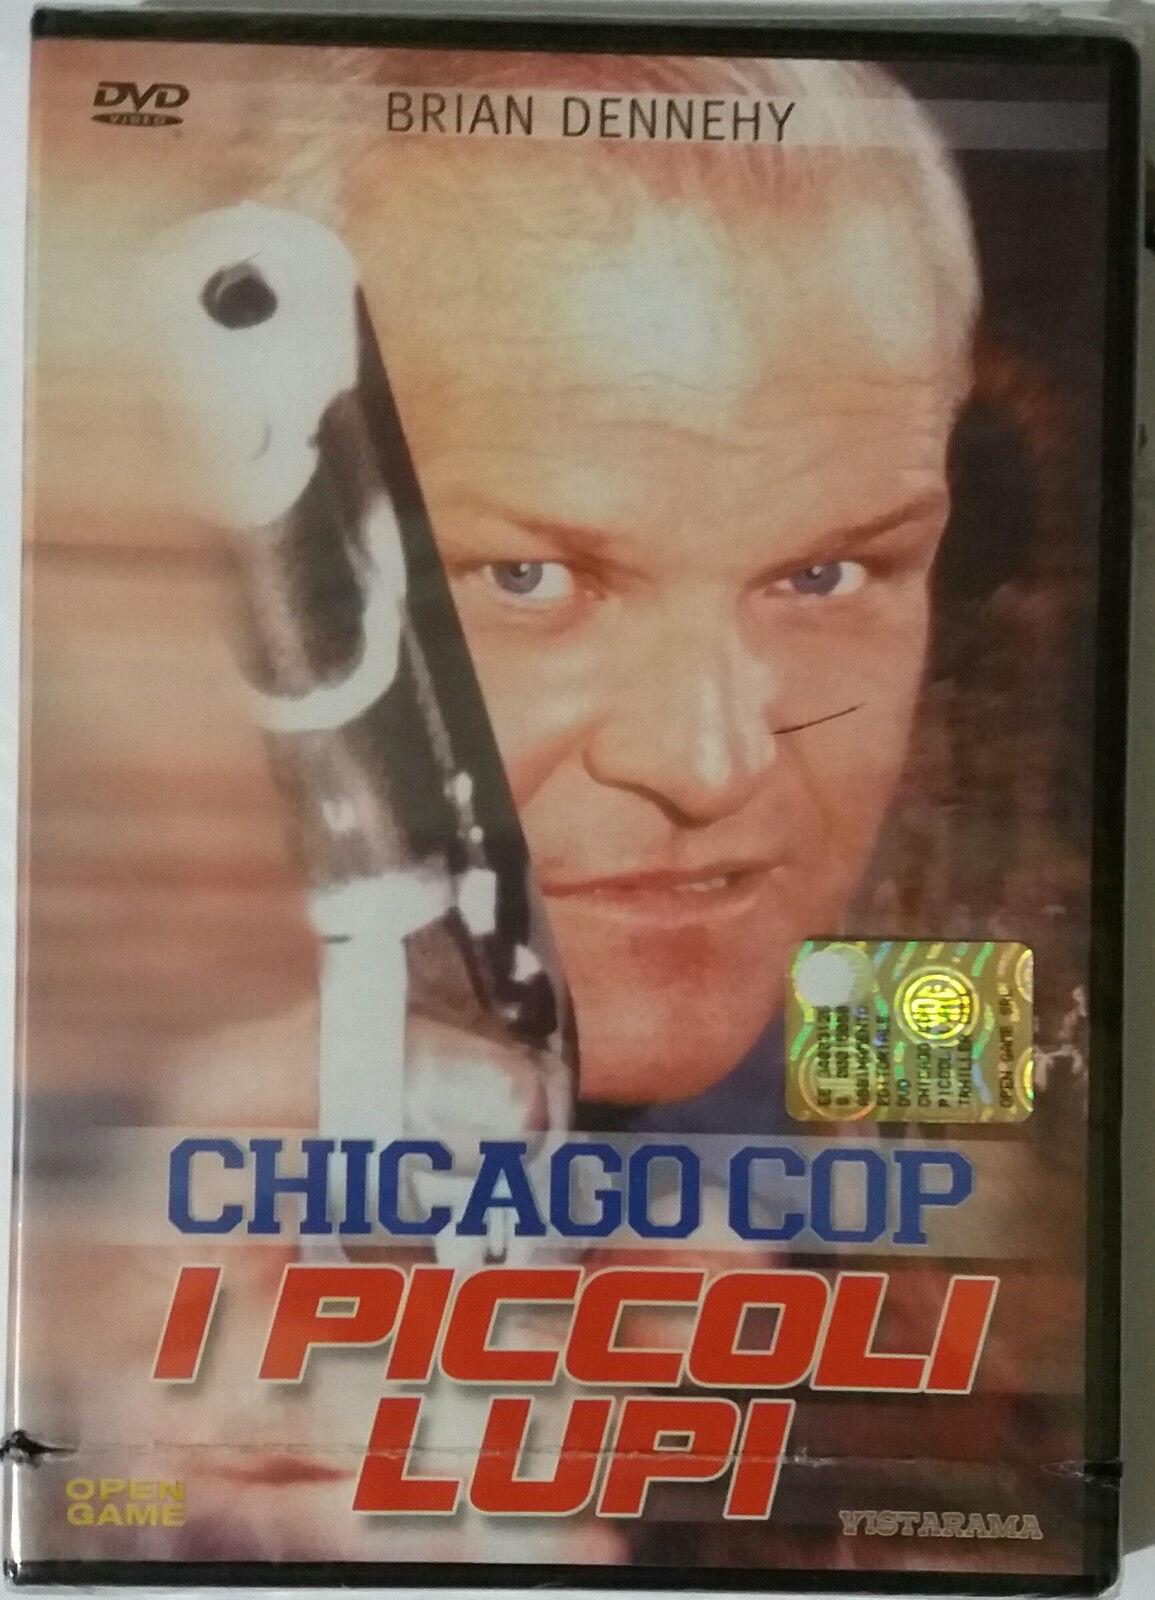 Chicago Cop, I piccoli lupi - Brian Dennehy - Vistarama - 1996 - DVD - G